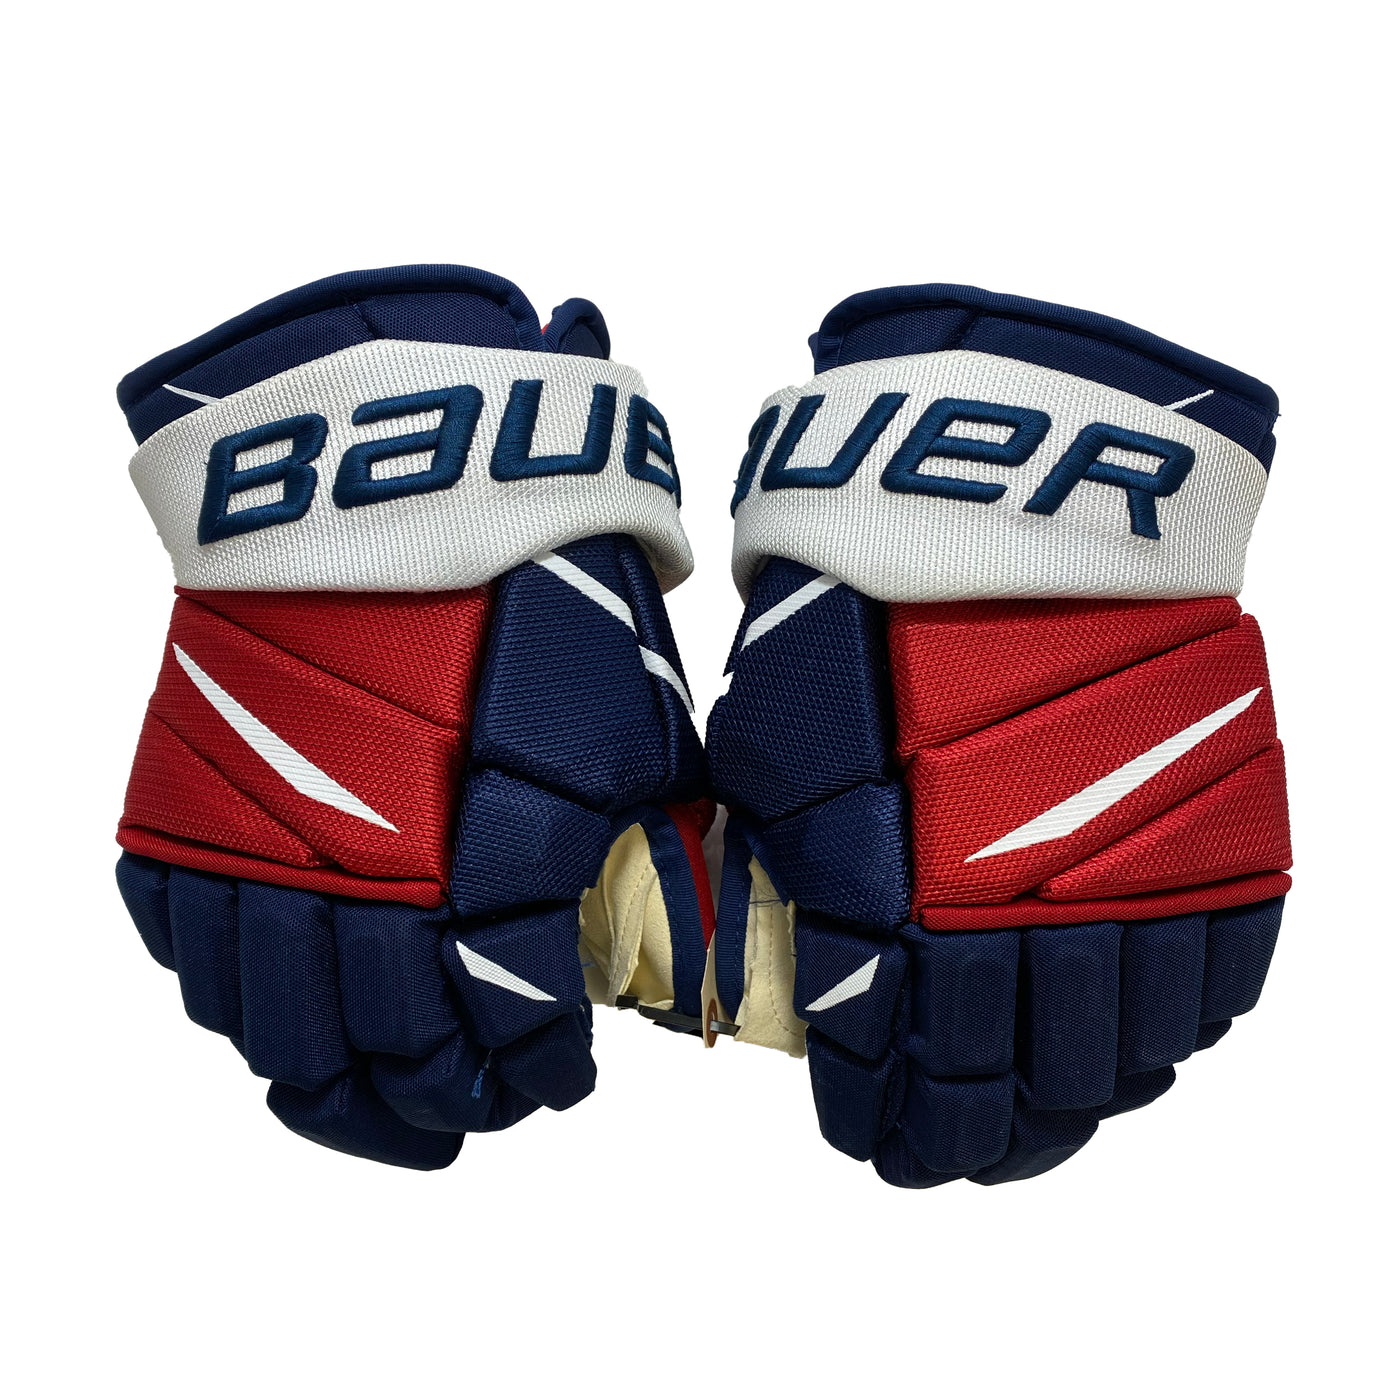 Bauer Vapor 2X Pro - Washington Capitals - Pro Stock Hockey Gloves - Dmitry Orlov